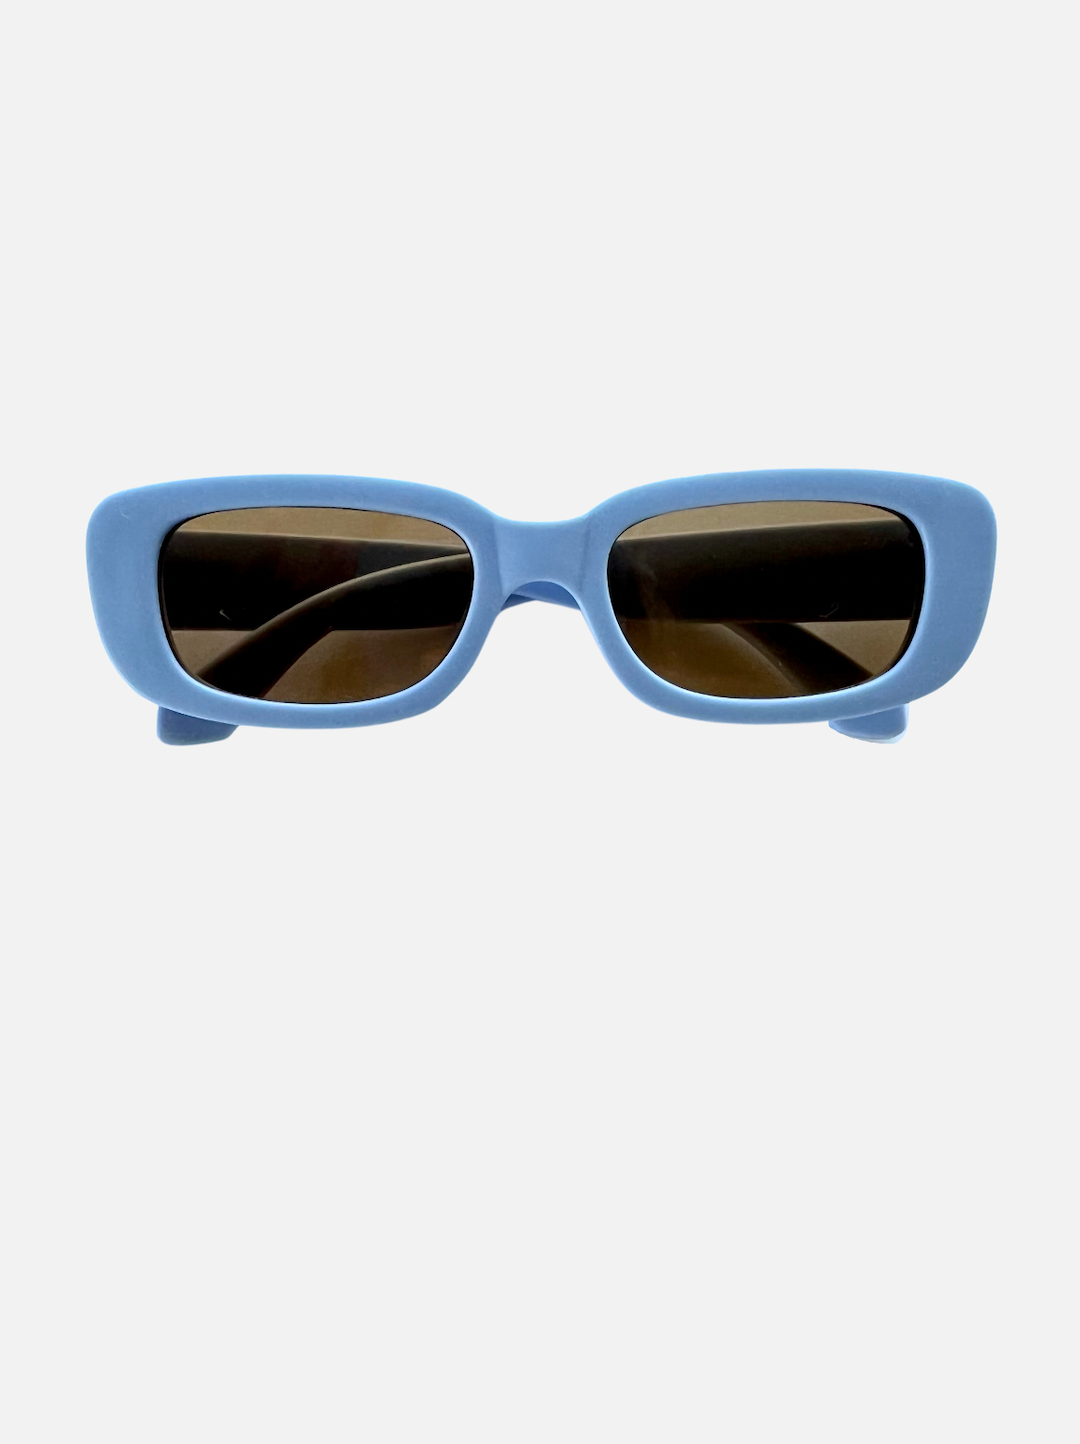 Blue Matte | A pair of kids' sunglasses with brown lenses inside pale blue frames